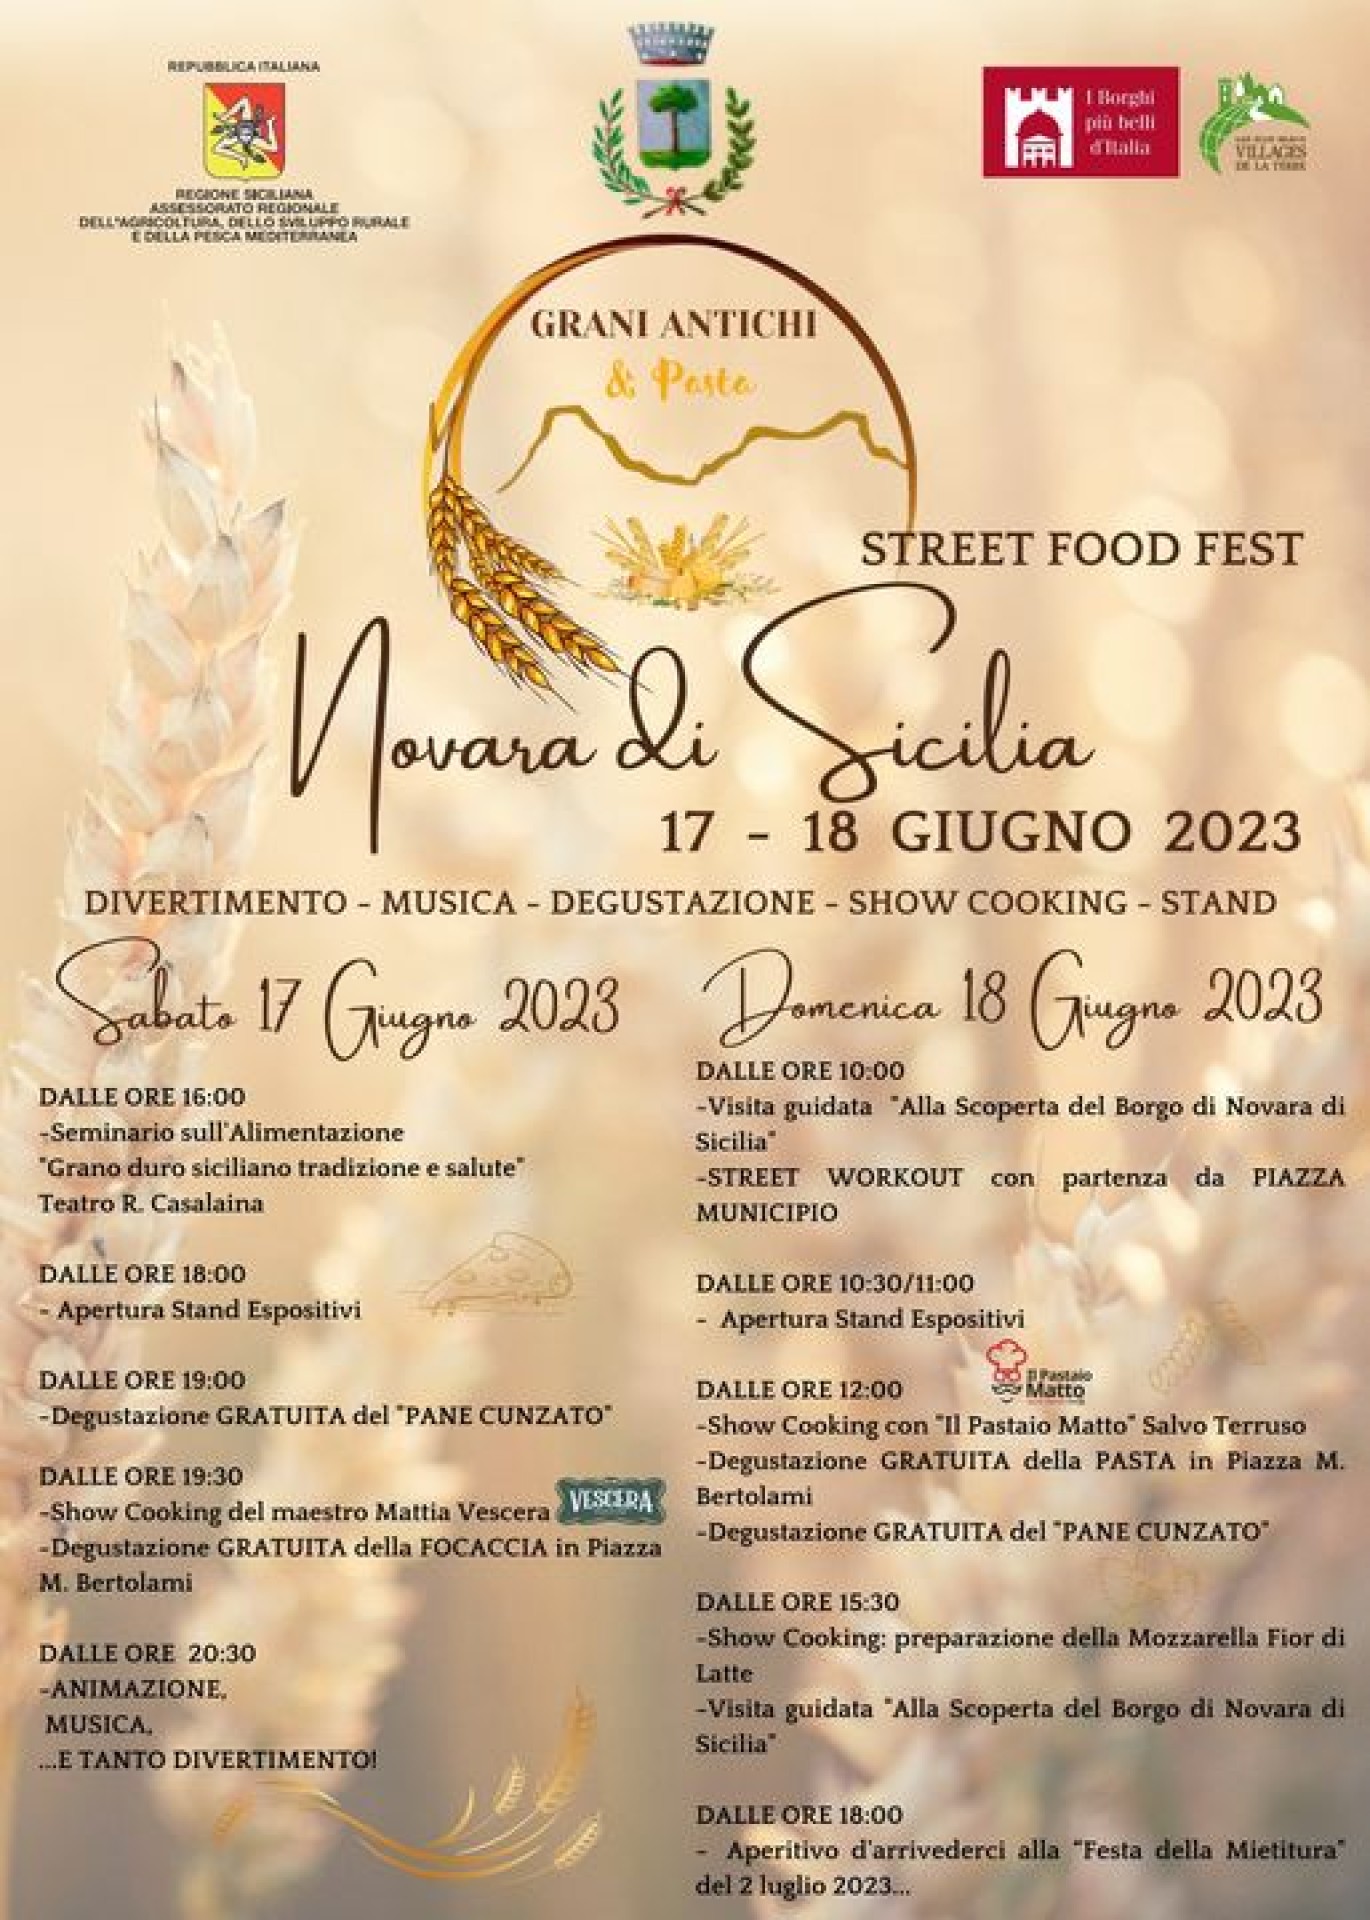 STREET FOOD FEST DEI GRANI ANTICHI & PASTA 2023